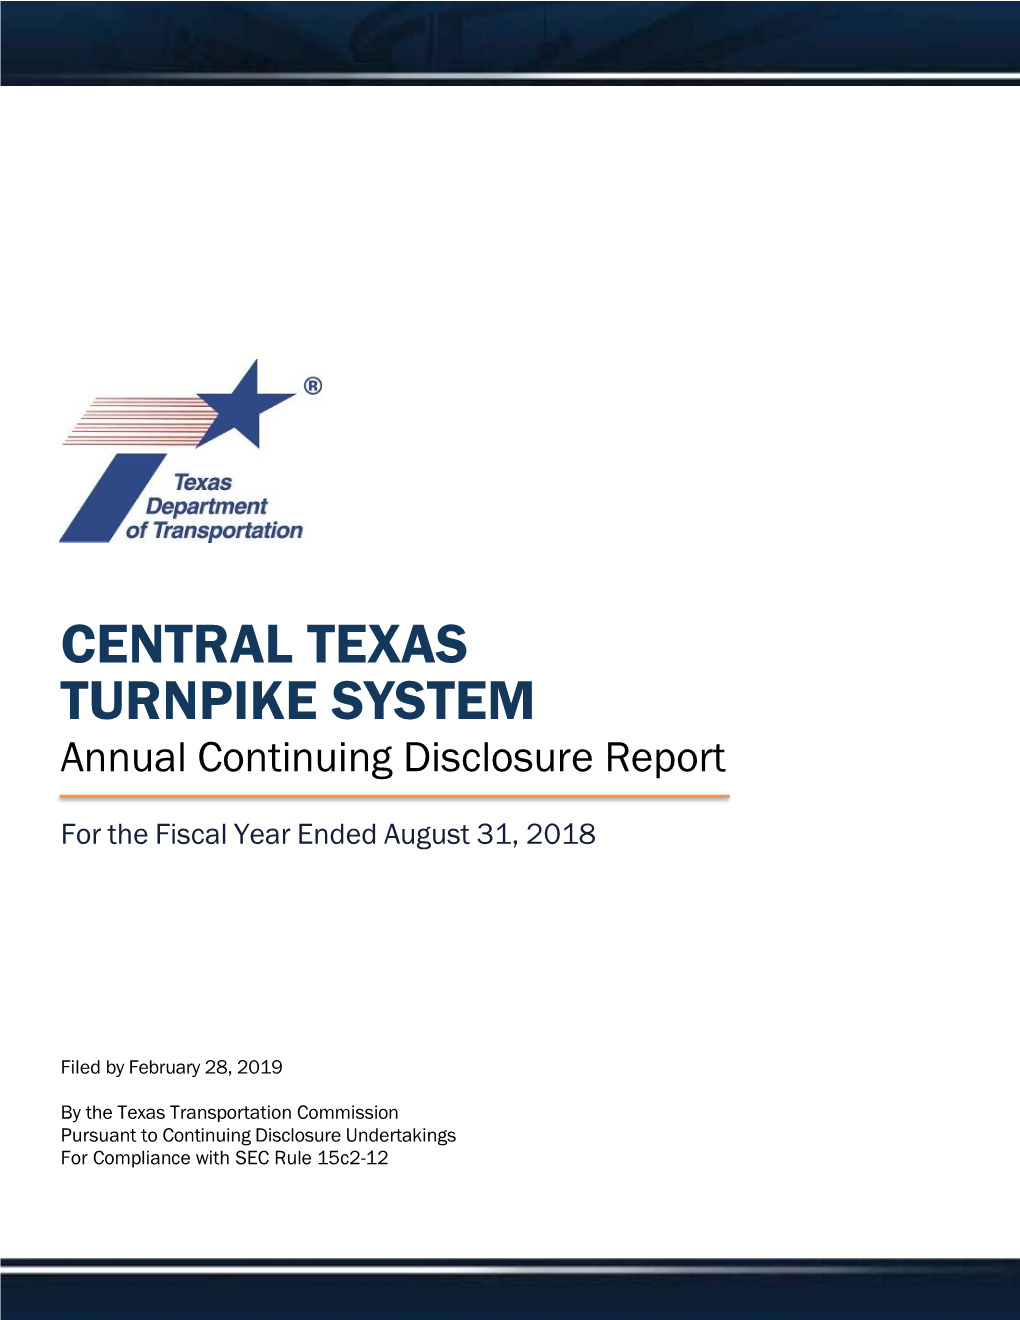 Annual Continuing Disclosure Report